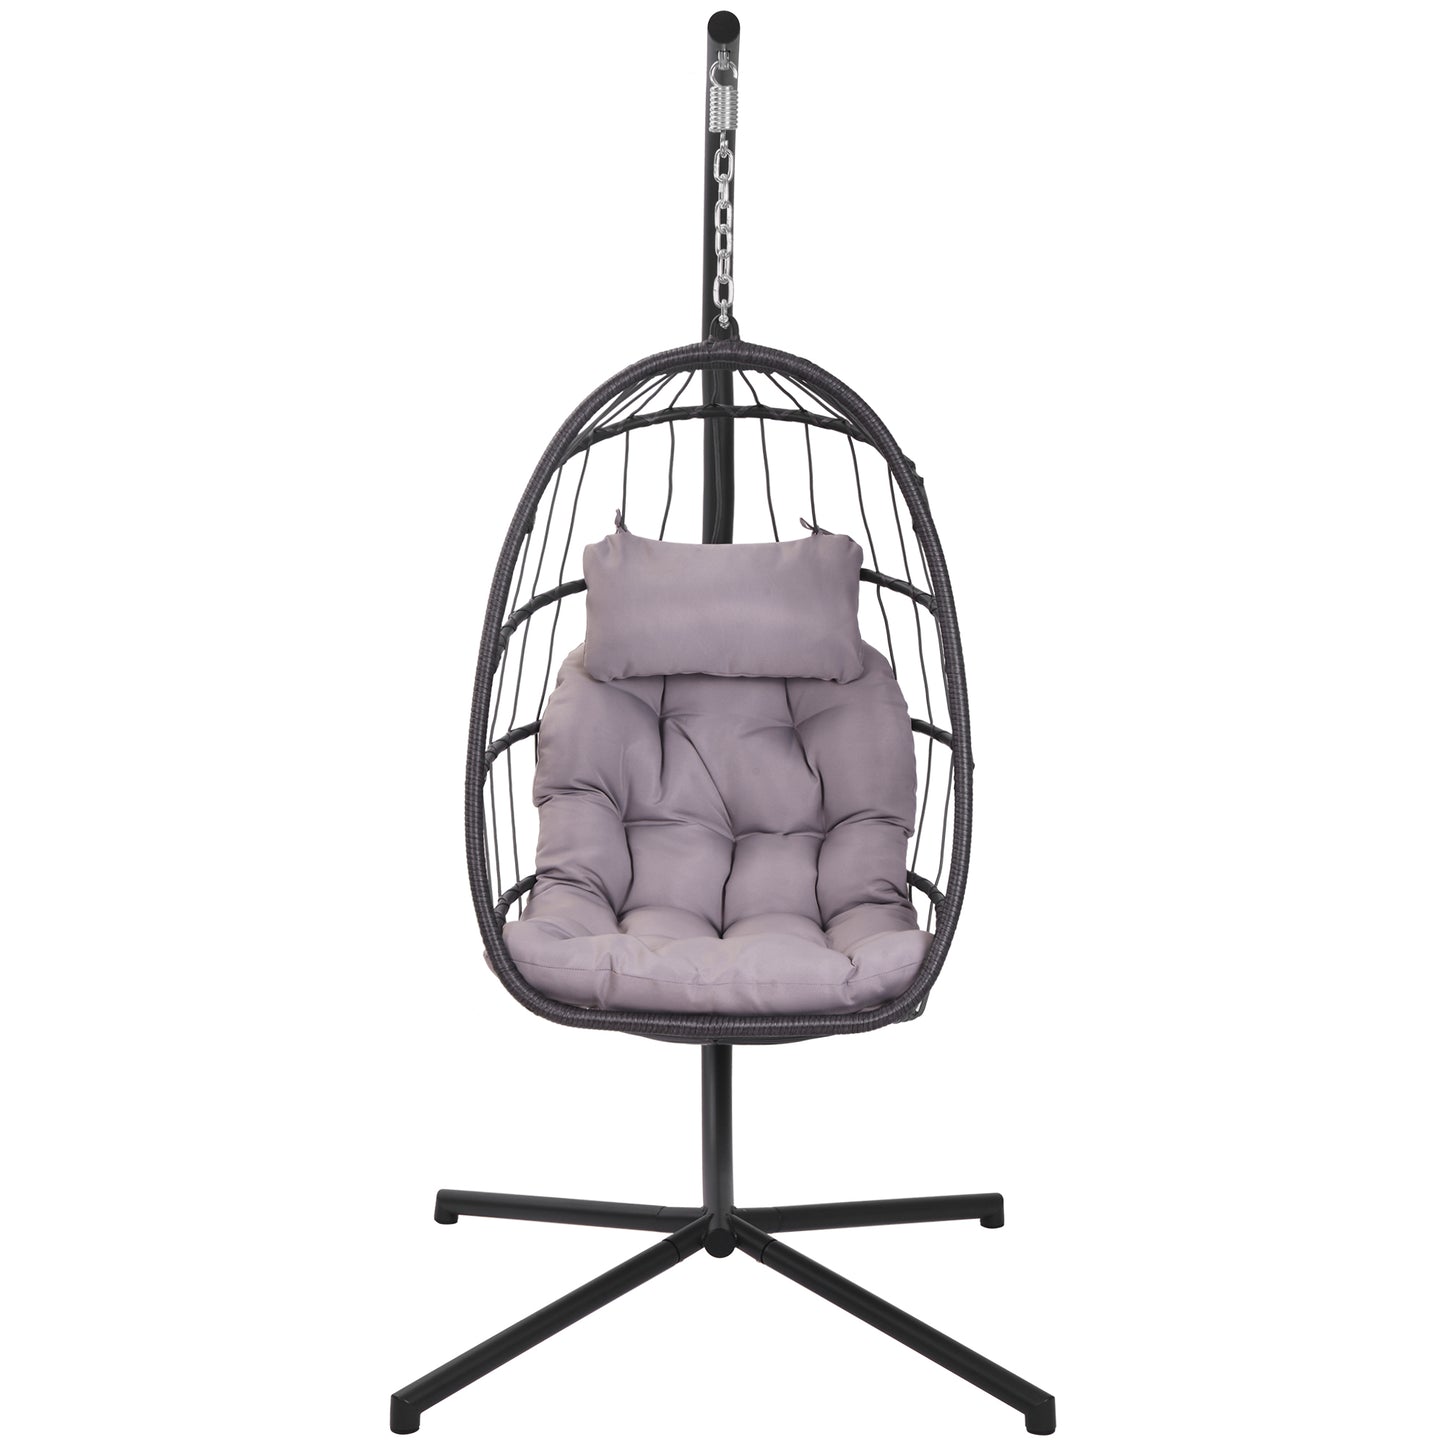 Hammock chair with stand, dark grey cushion, PE wicker rattan, aluminum frame